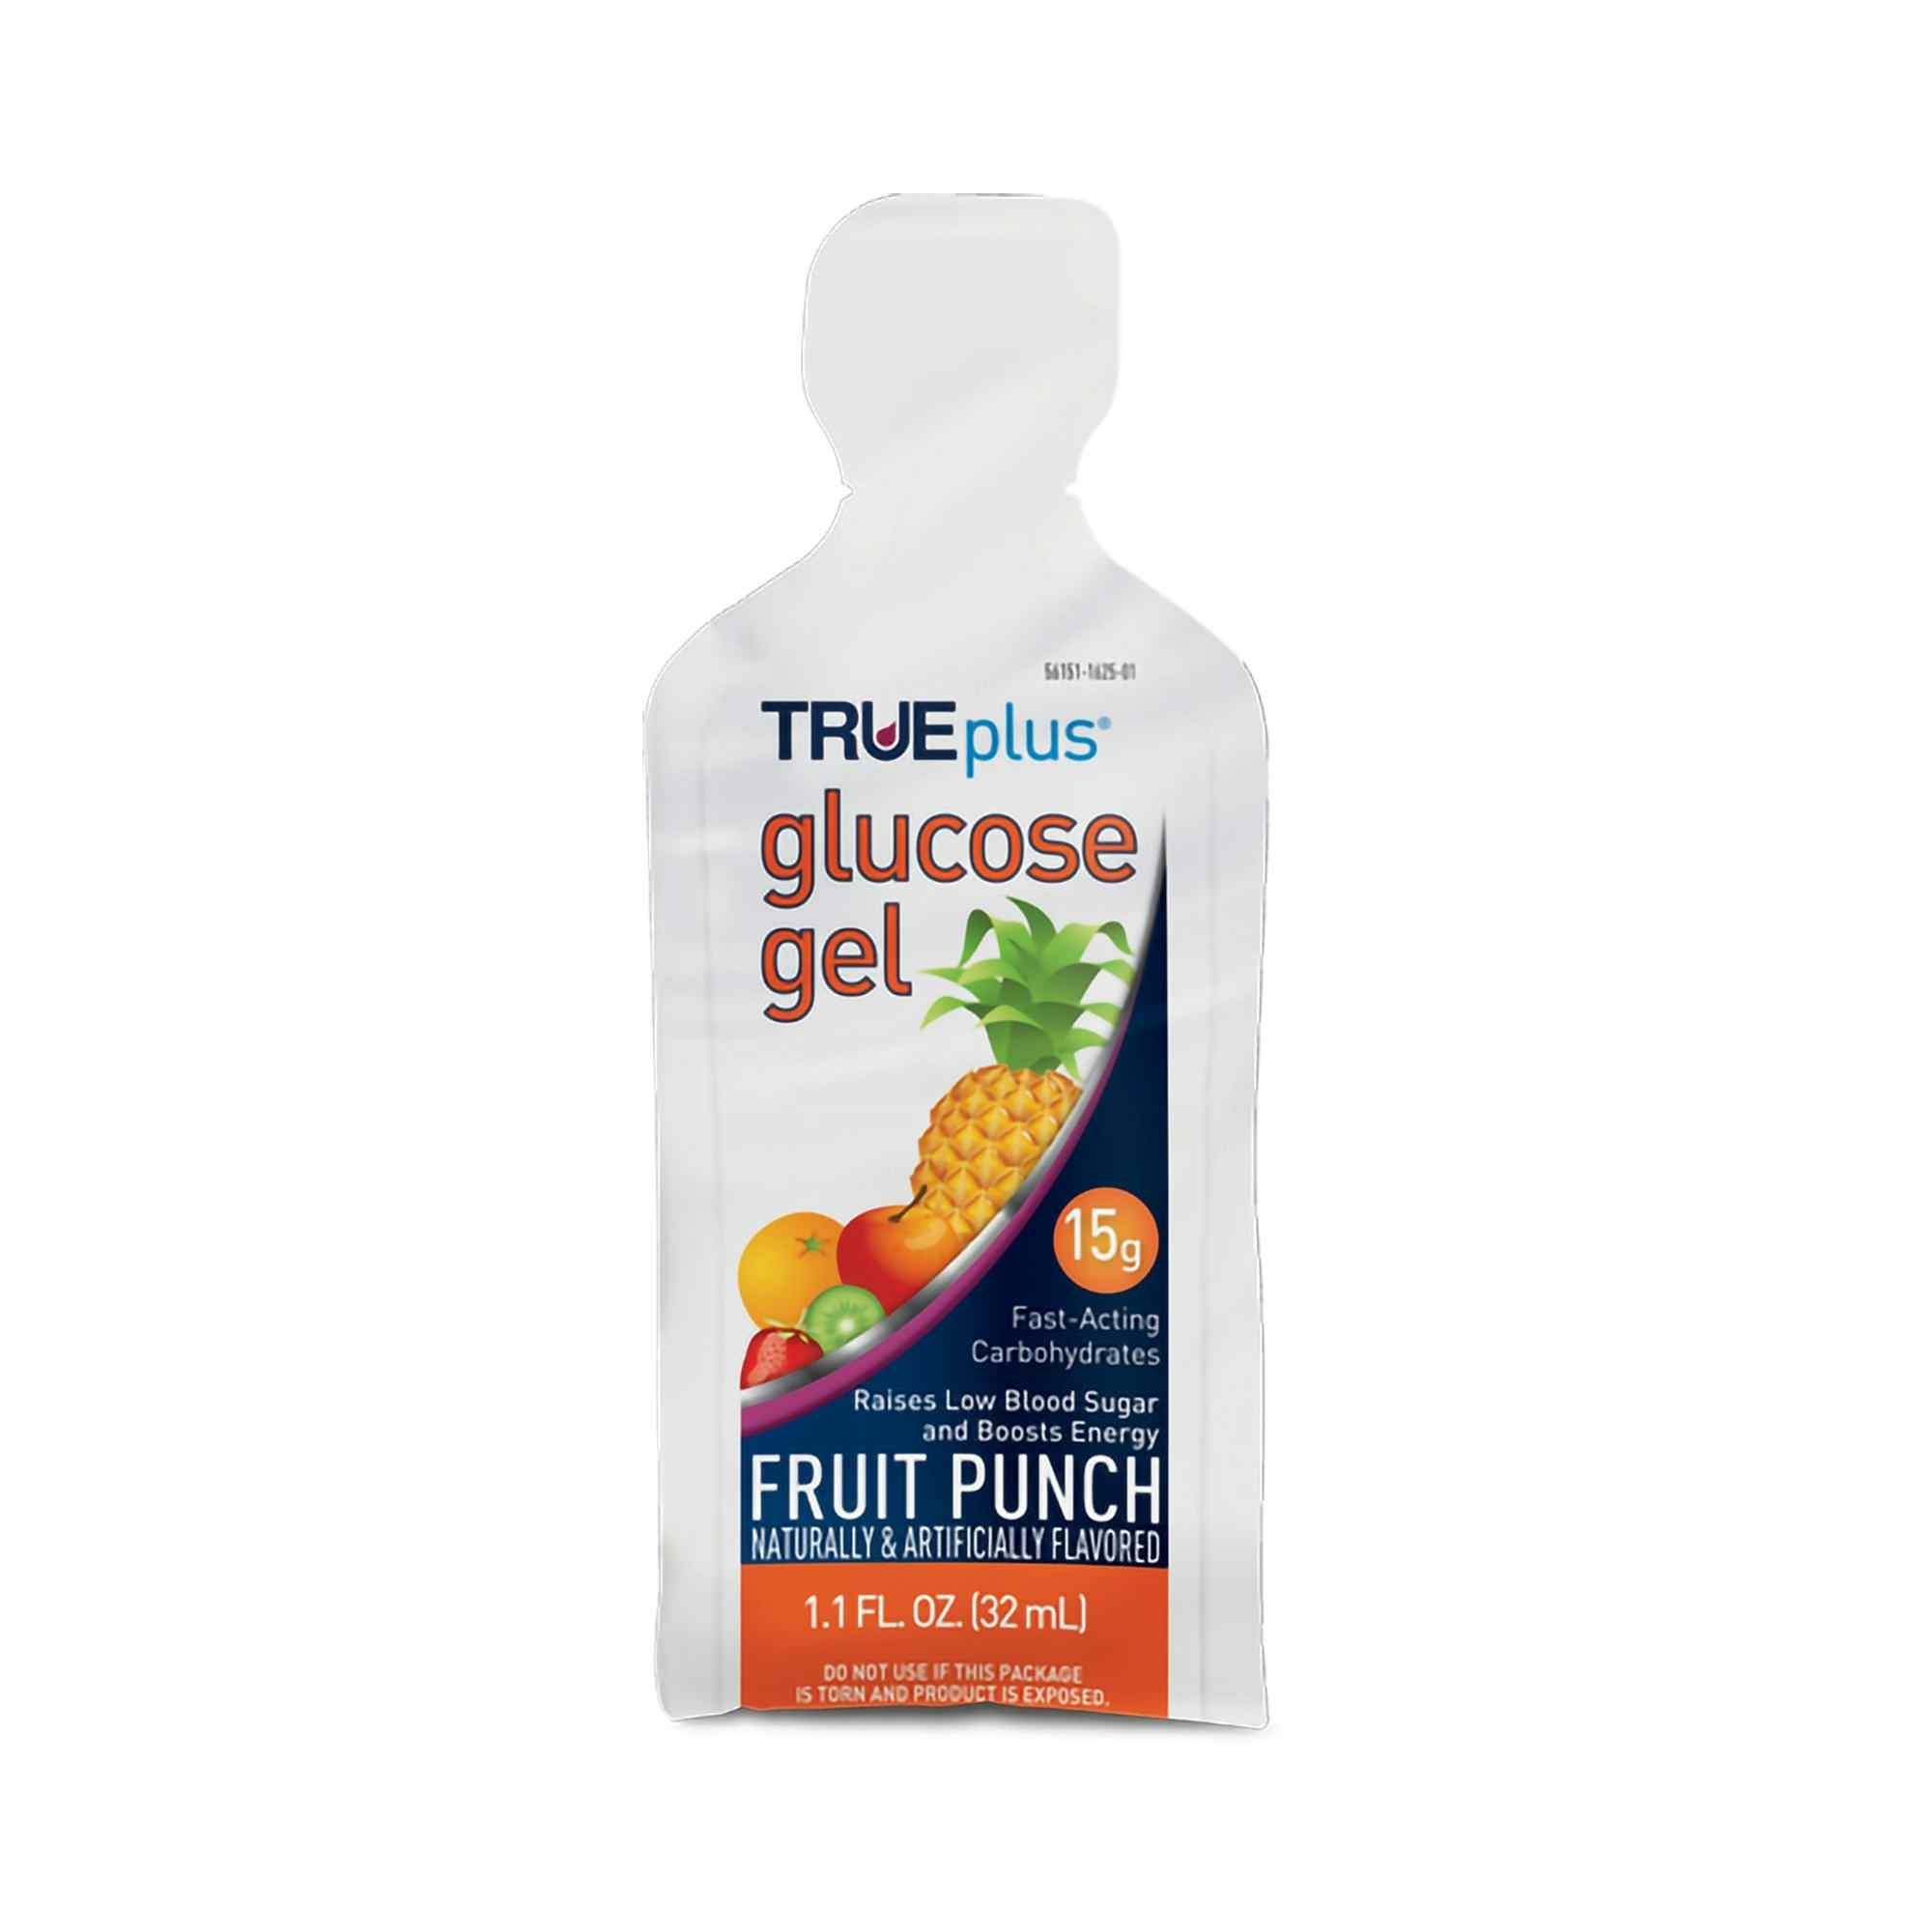 TRUEplus Glucose Gel, Fruit Punch, 1.1 oz., P2H01FP-01, Pack of 6